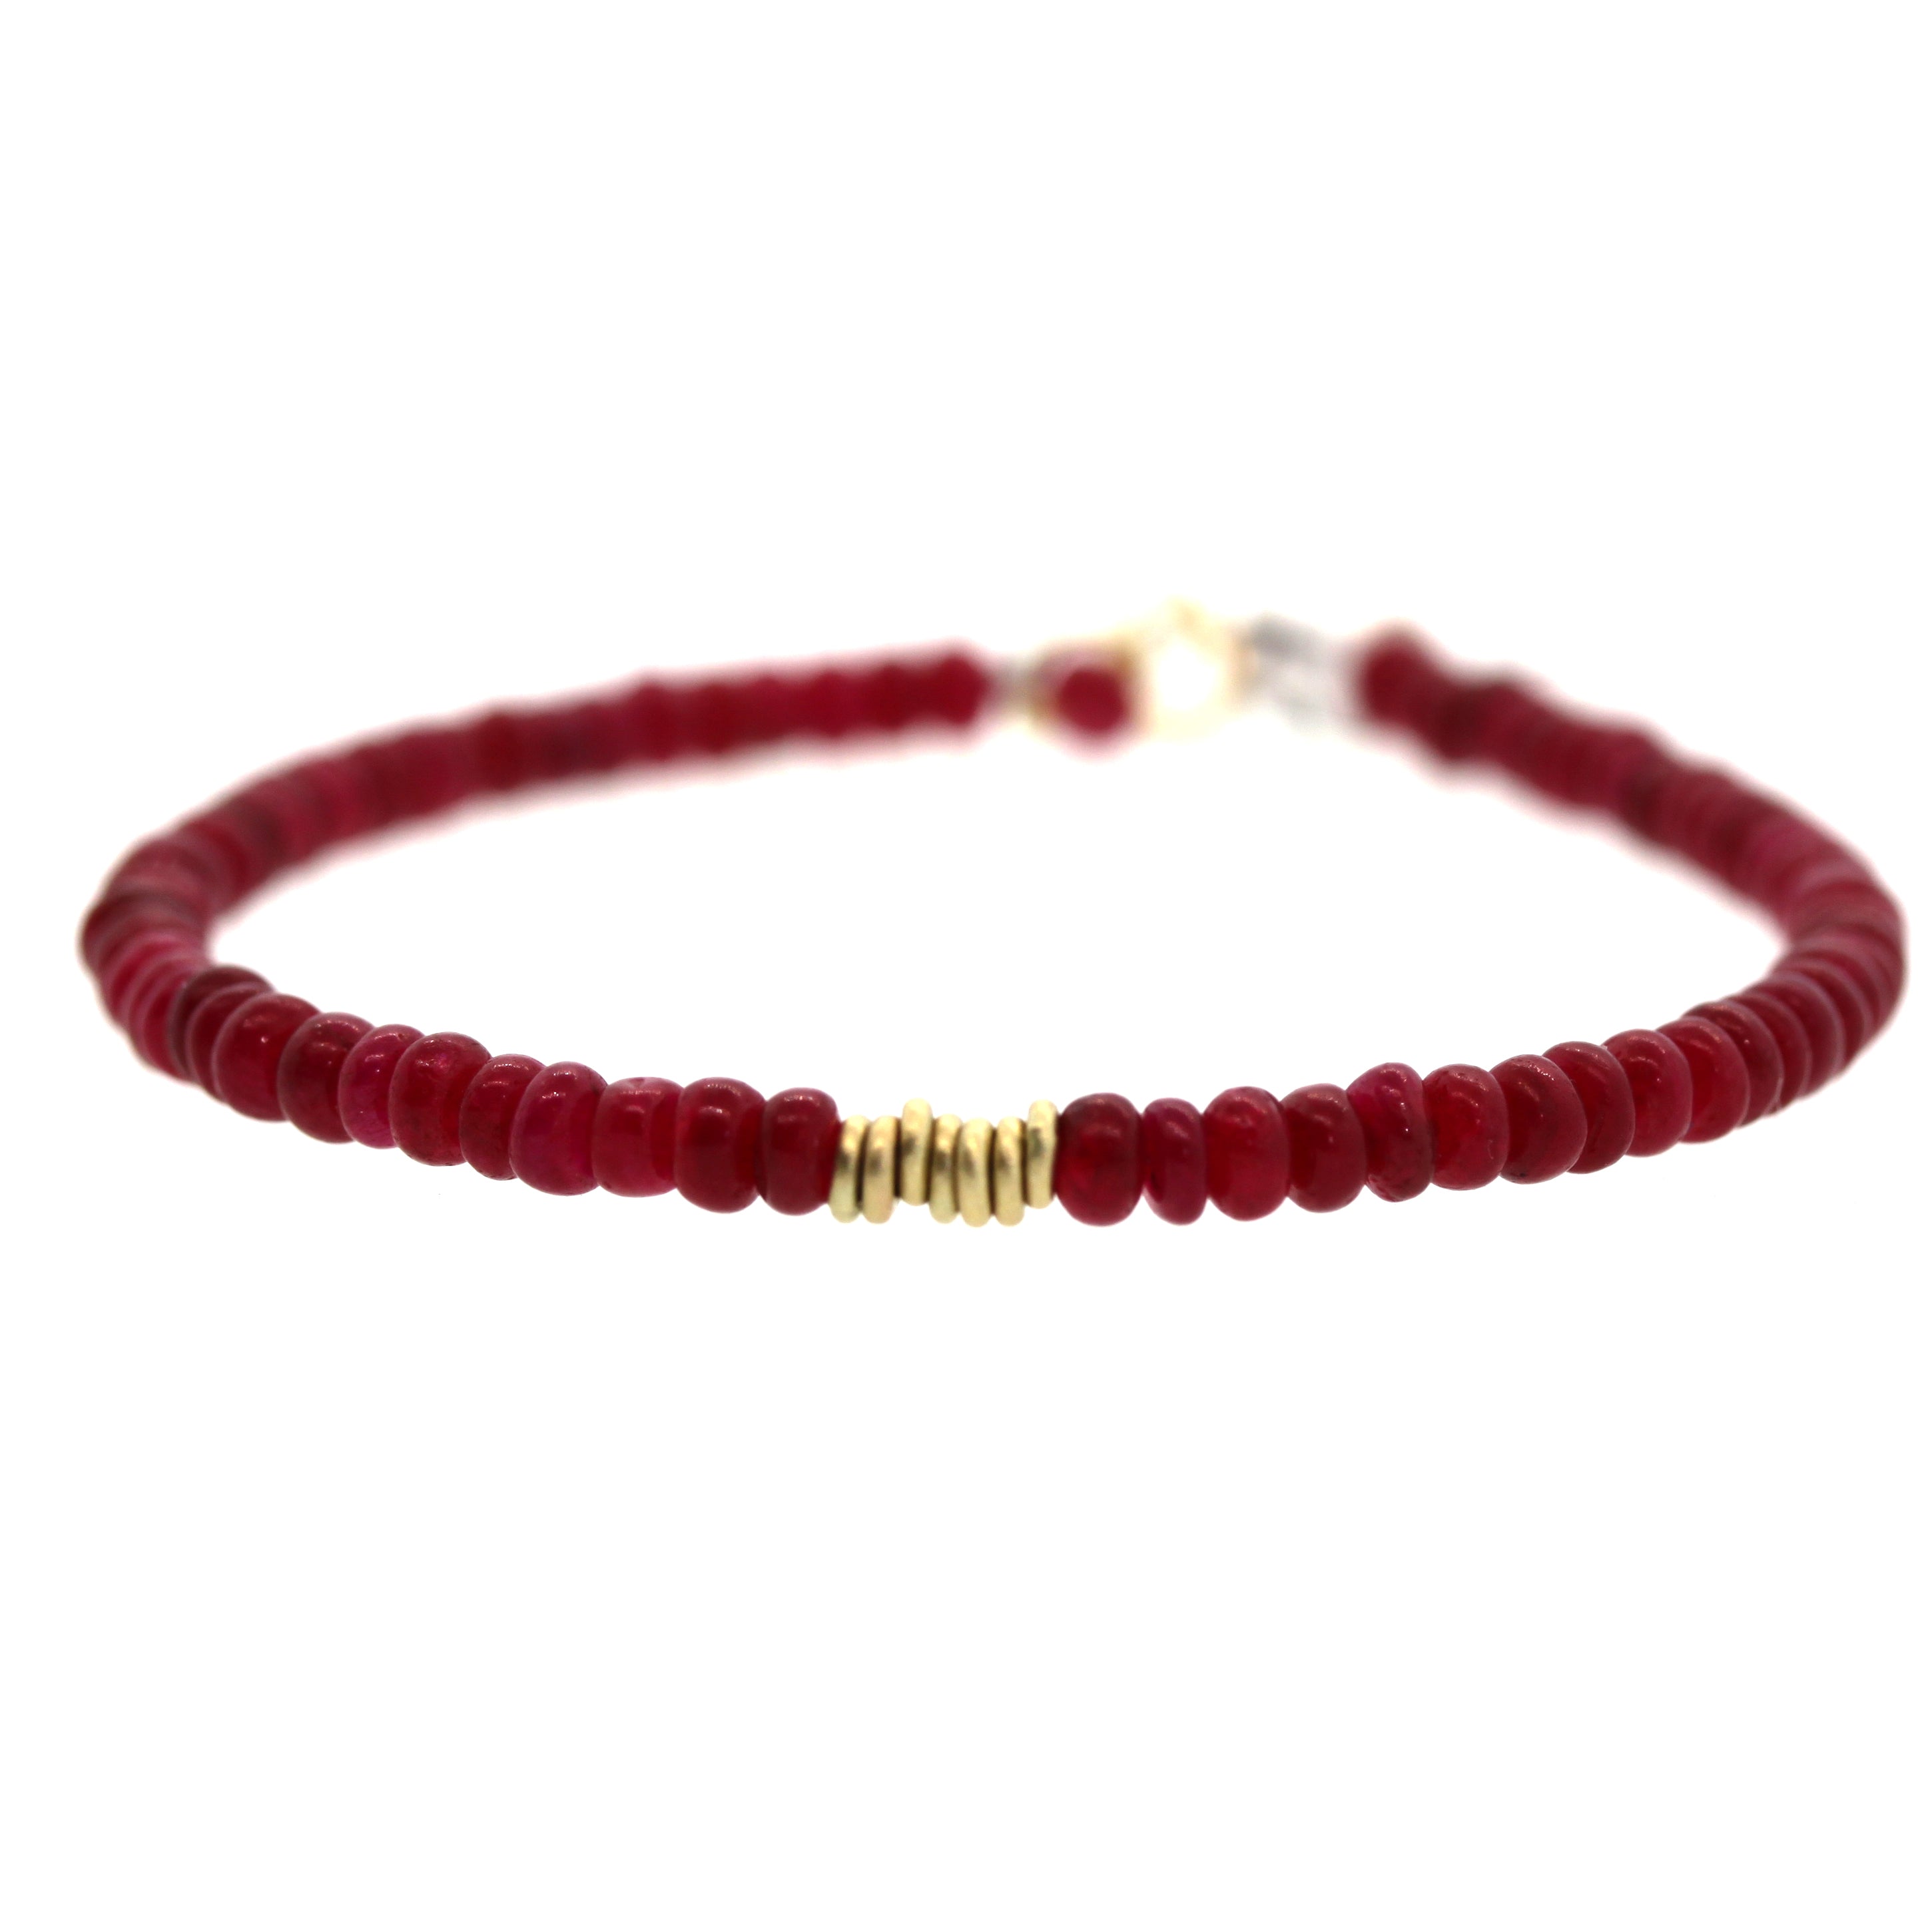 Ruby Gold Ring Bracelet, prayer bracelet, rebecca lankford designs